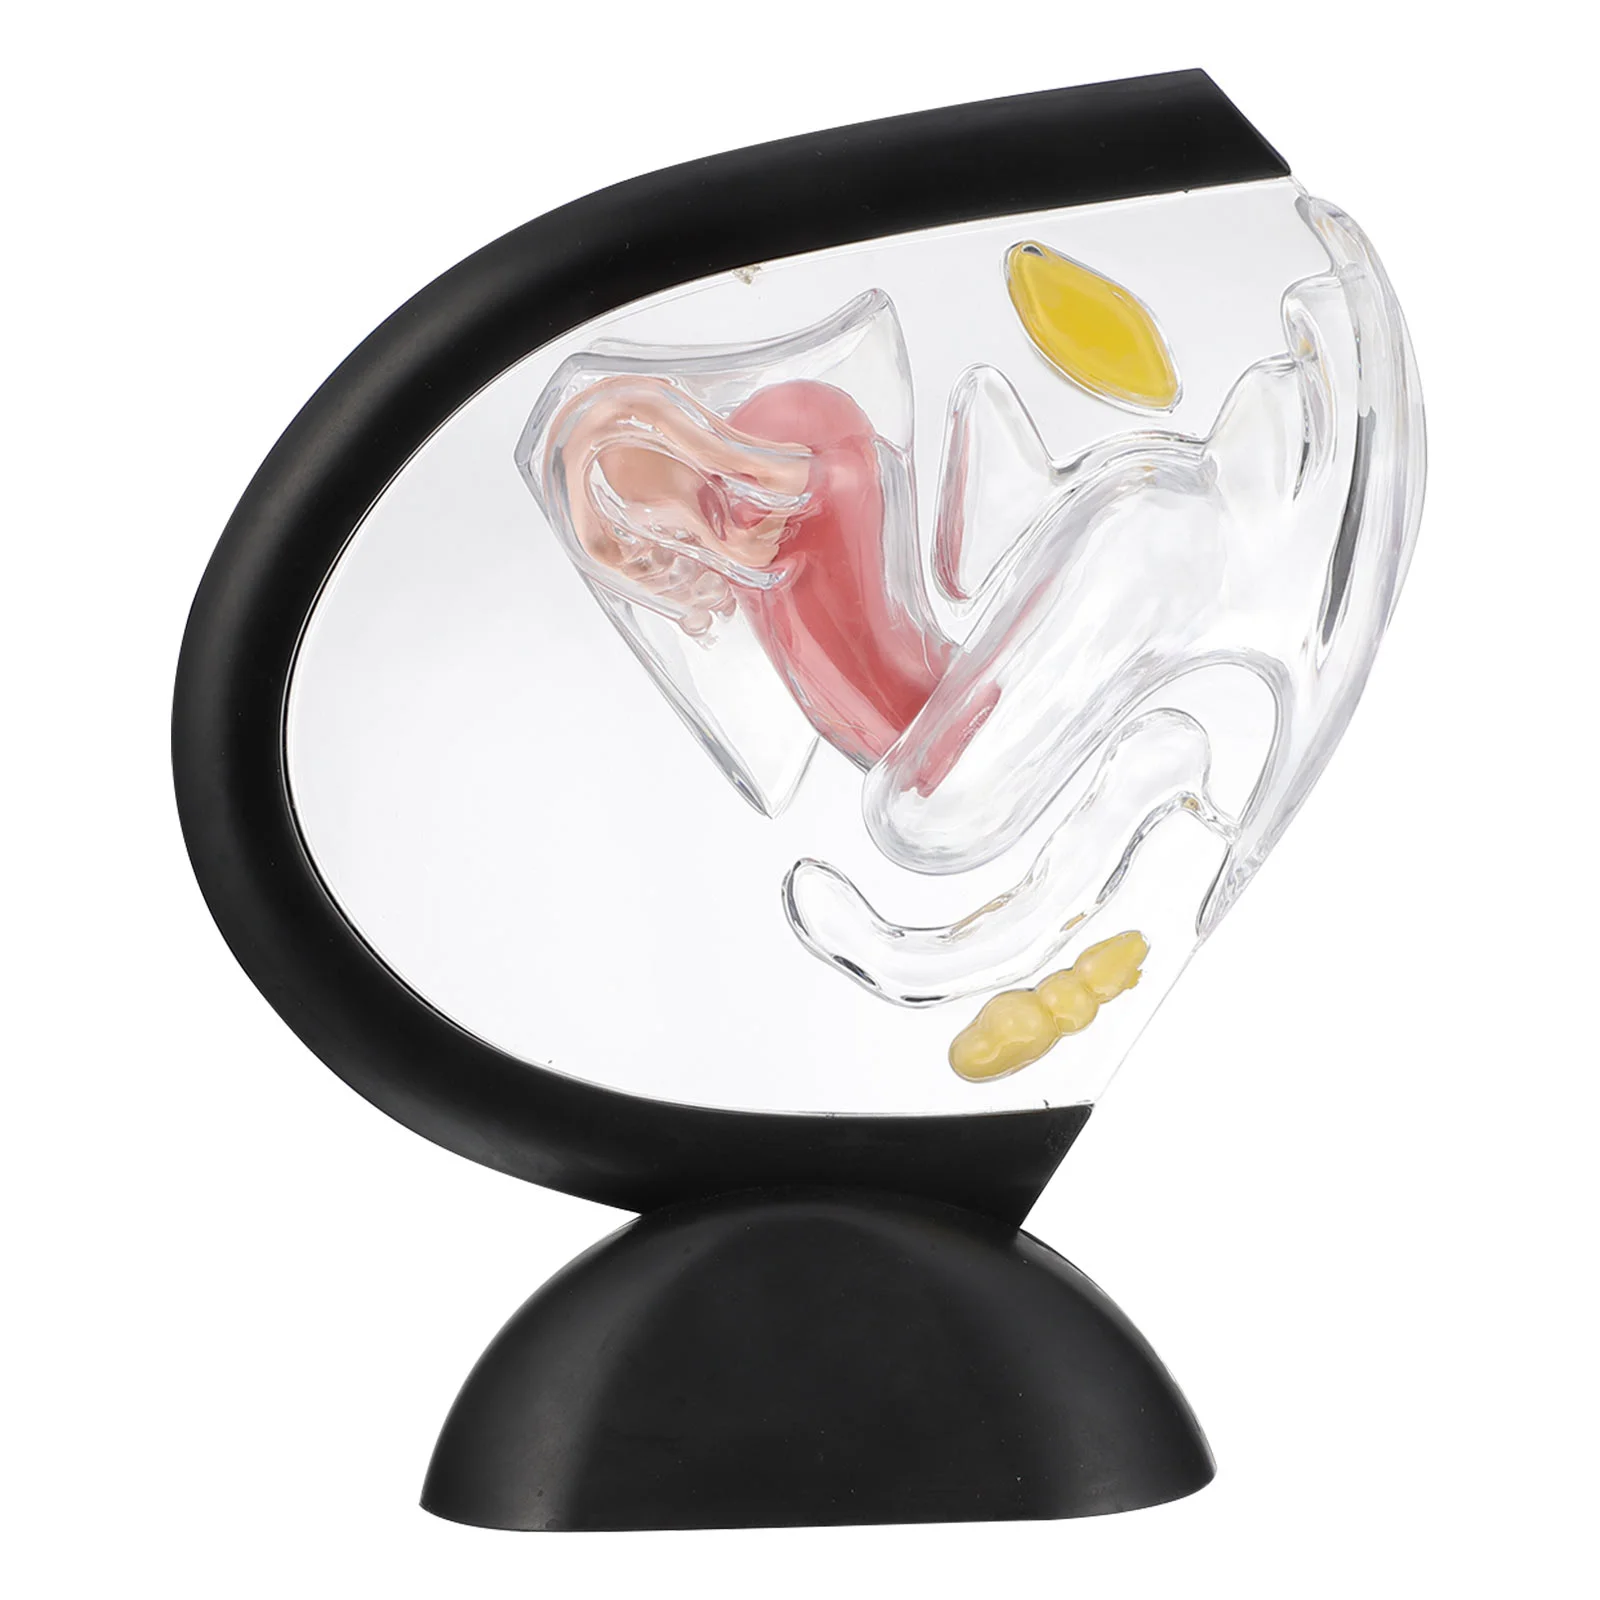 

Mannequin Transparent Uterus Model Medical Research Human Body Wall Female Reproductive Organ Teaching Supply Nurse